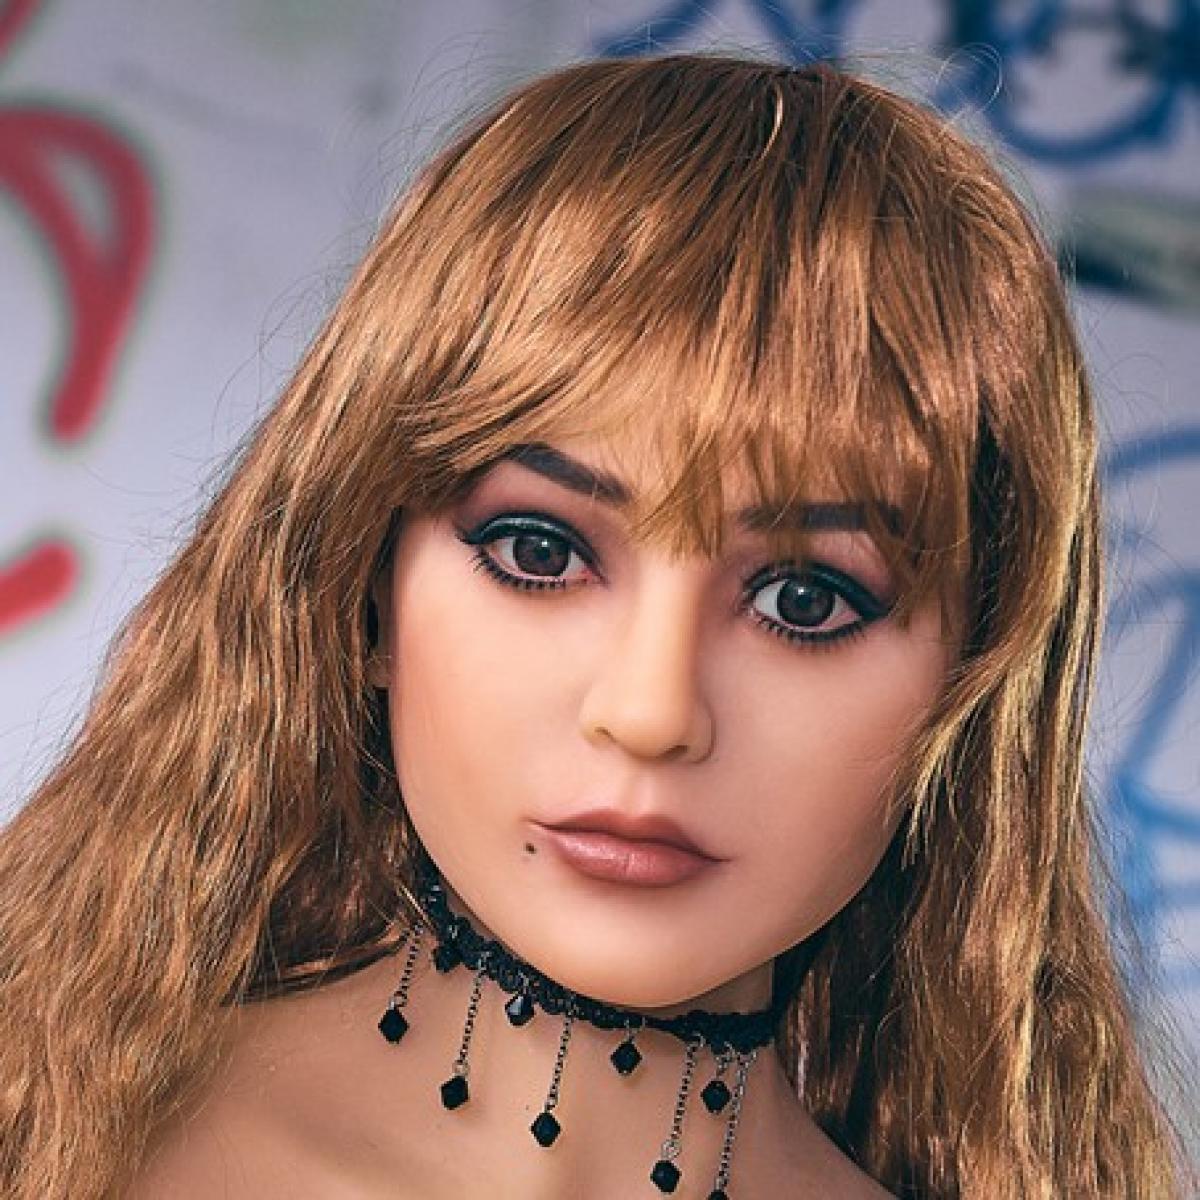 Neodoll Racy Julia - Sex Doll Head - M16 Compatible - Tan